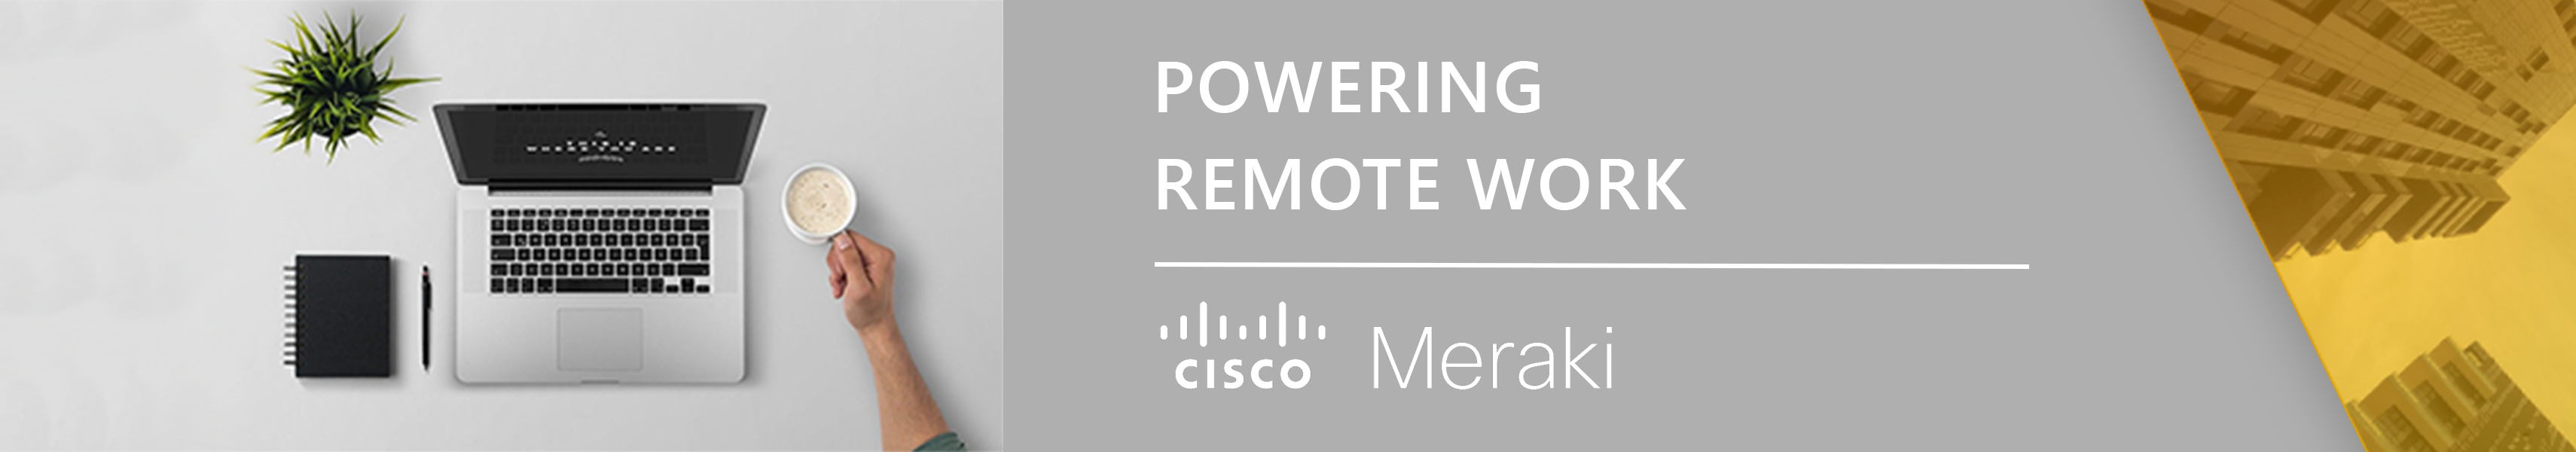 Cisco Meraki Remote Work